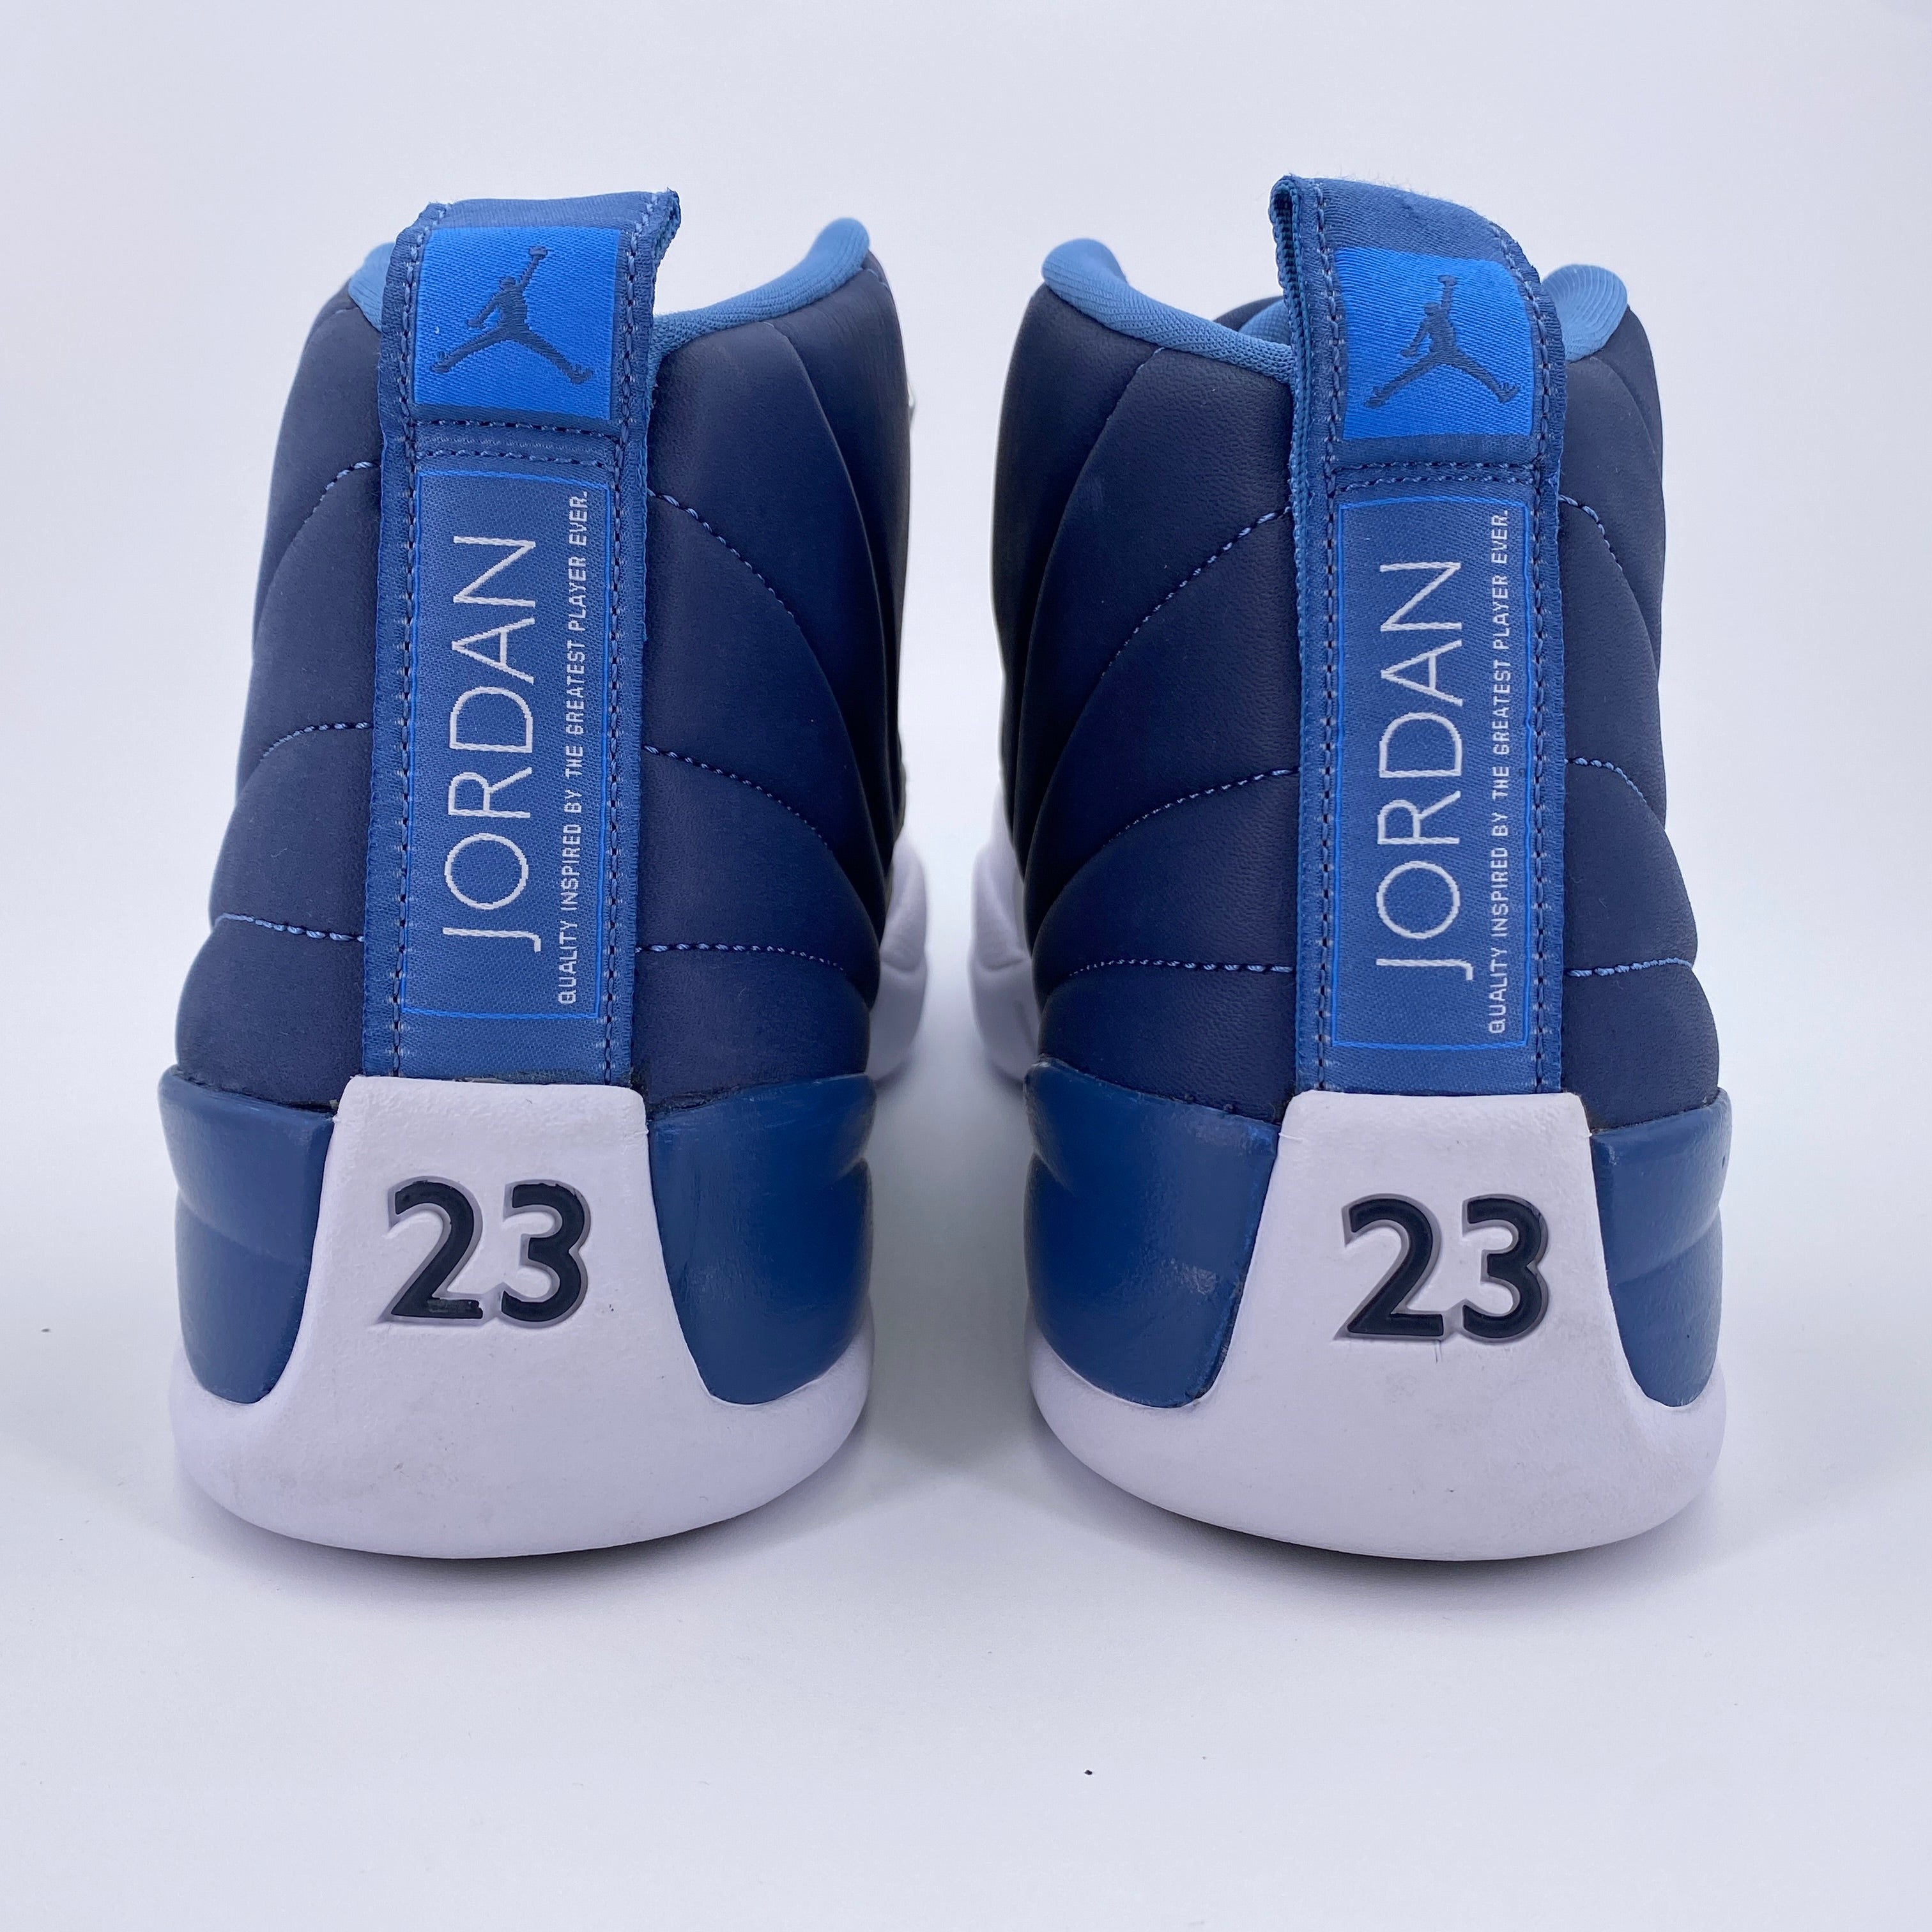 Air Jordan 12 Retro "Stone Blue" 2020 New Size 14